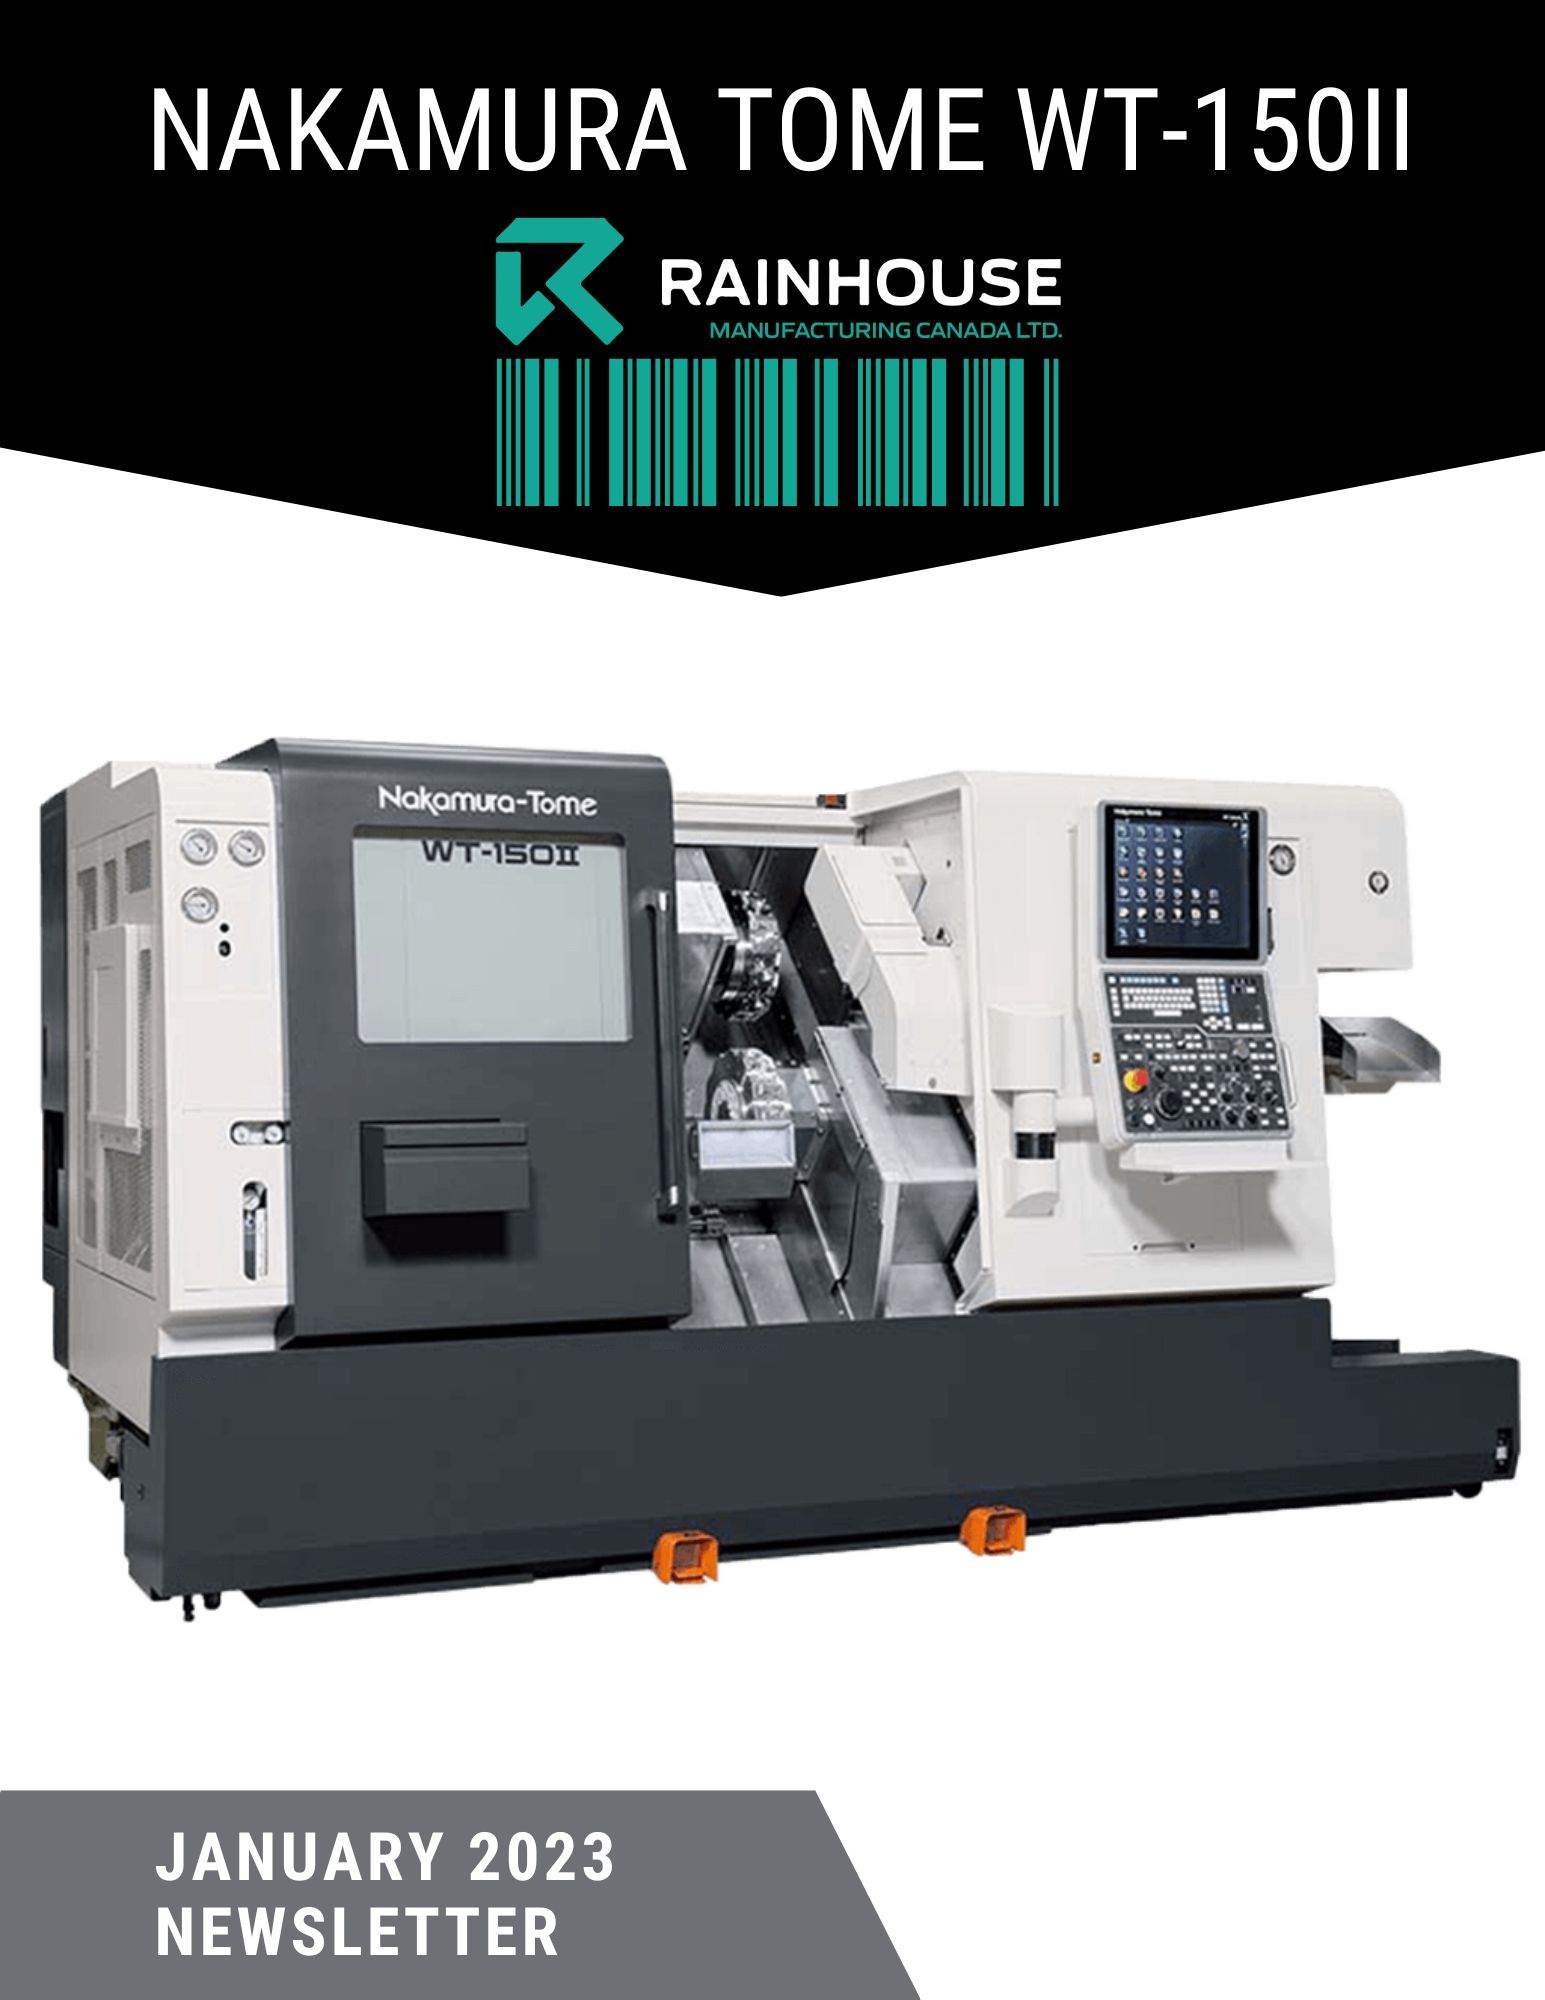 Nakamura Tome WT-150ii - Rainhouse's new 8-axis CNC lathe